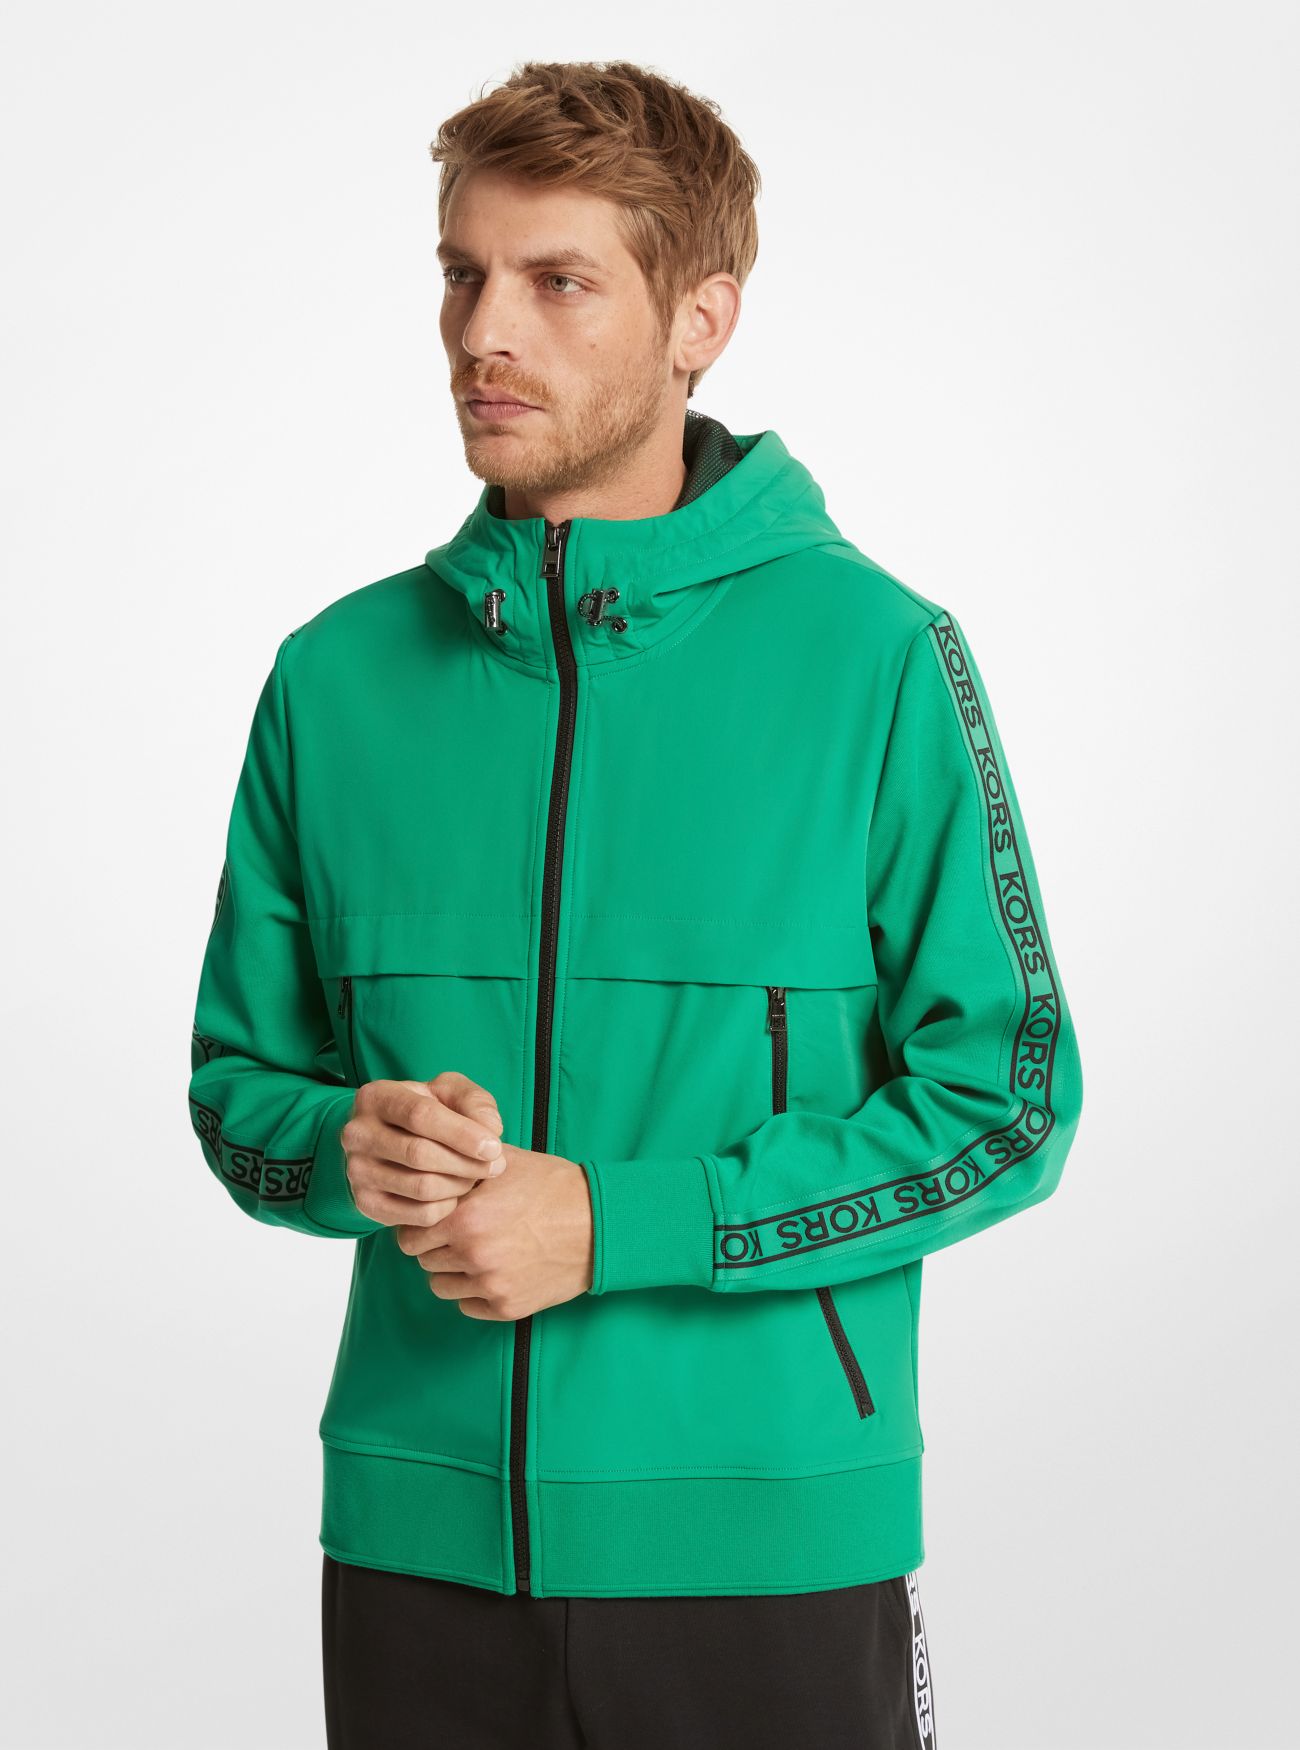 MK Logo Tape Cotton Blend Zip-Up Hoodie - Bright Jewel Green - Michael Kors